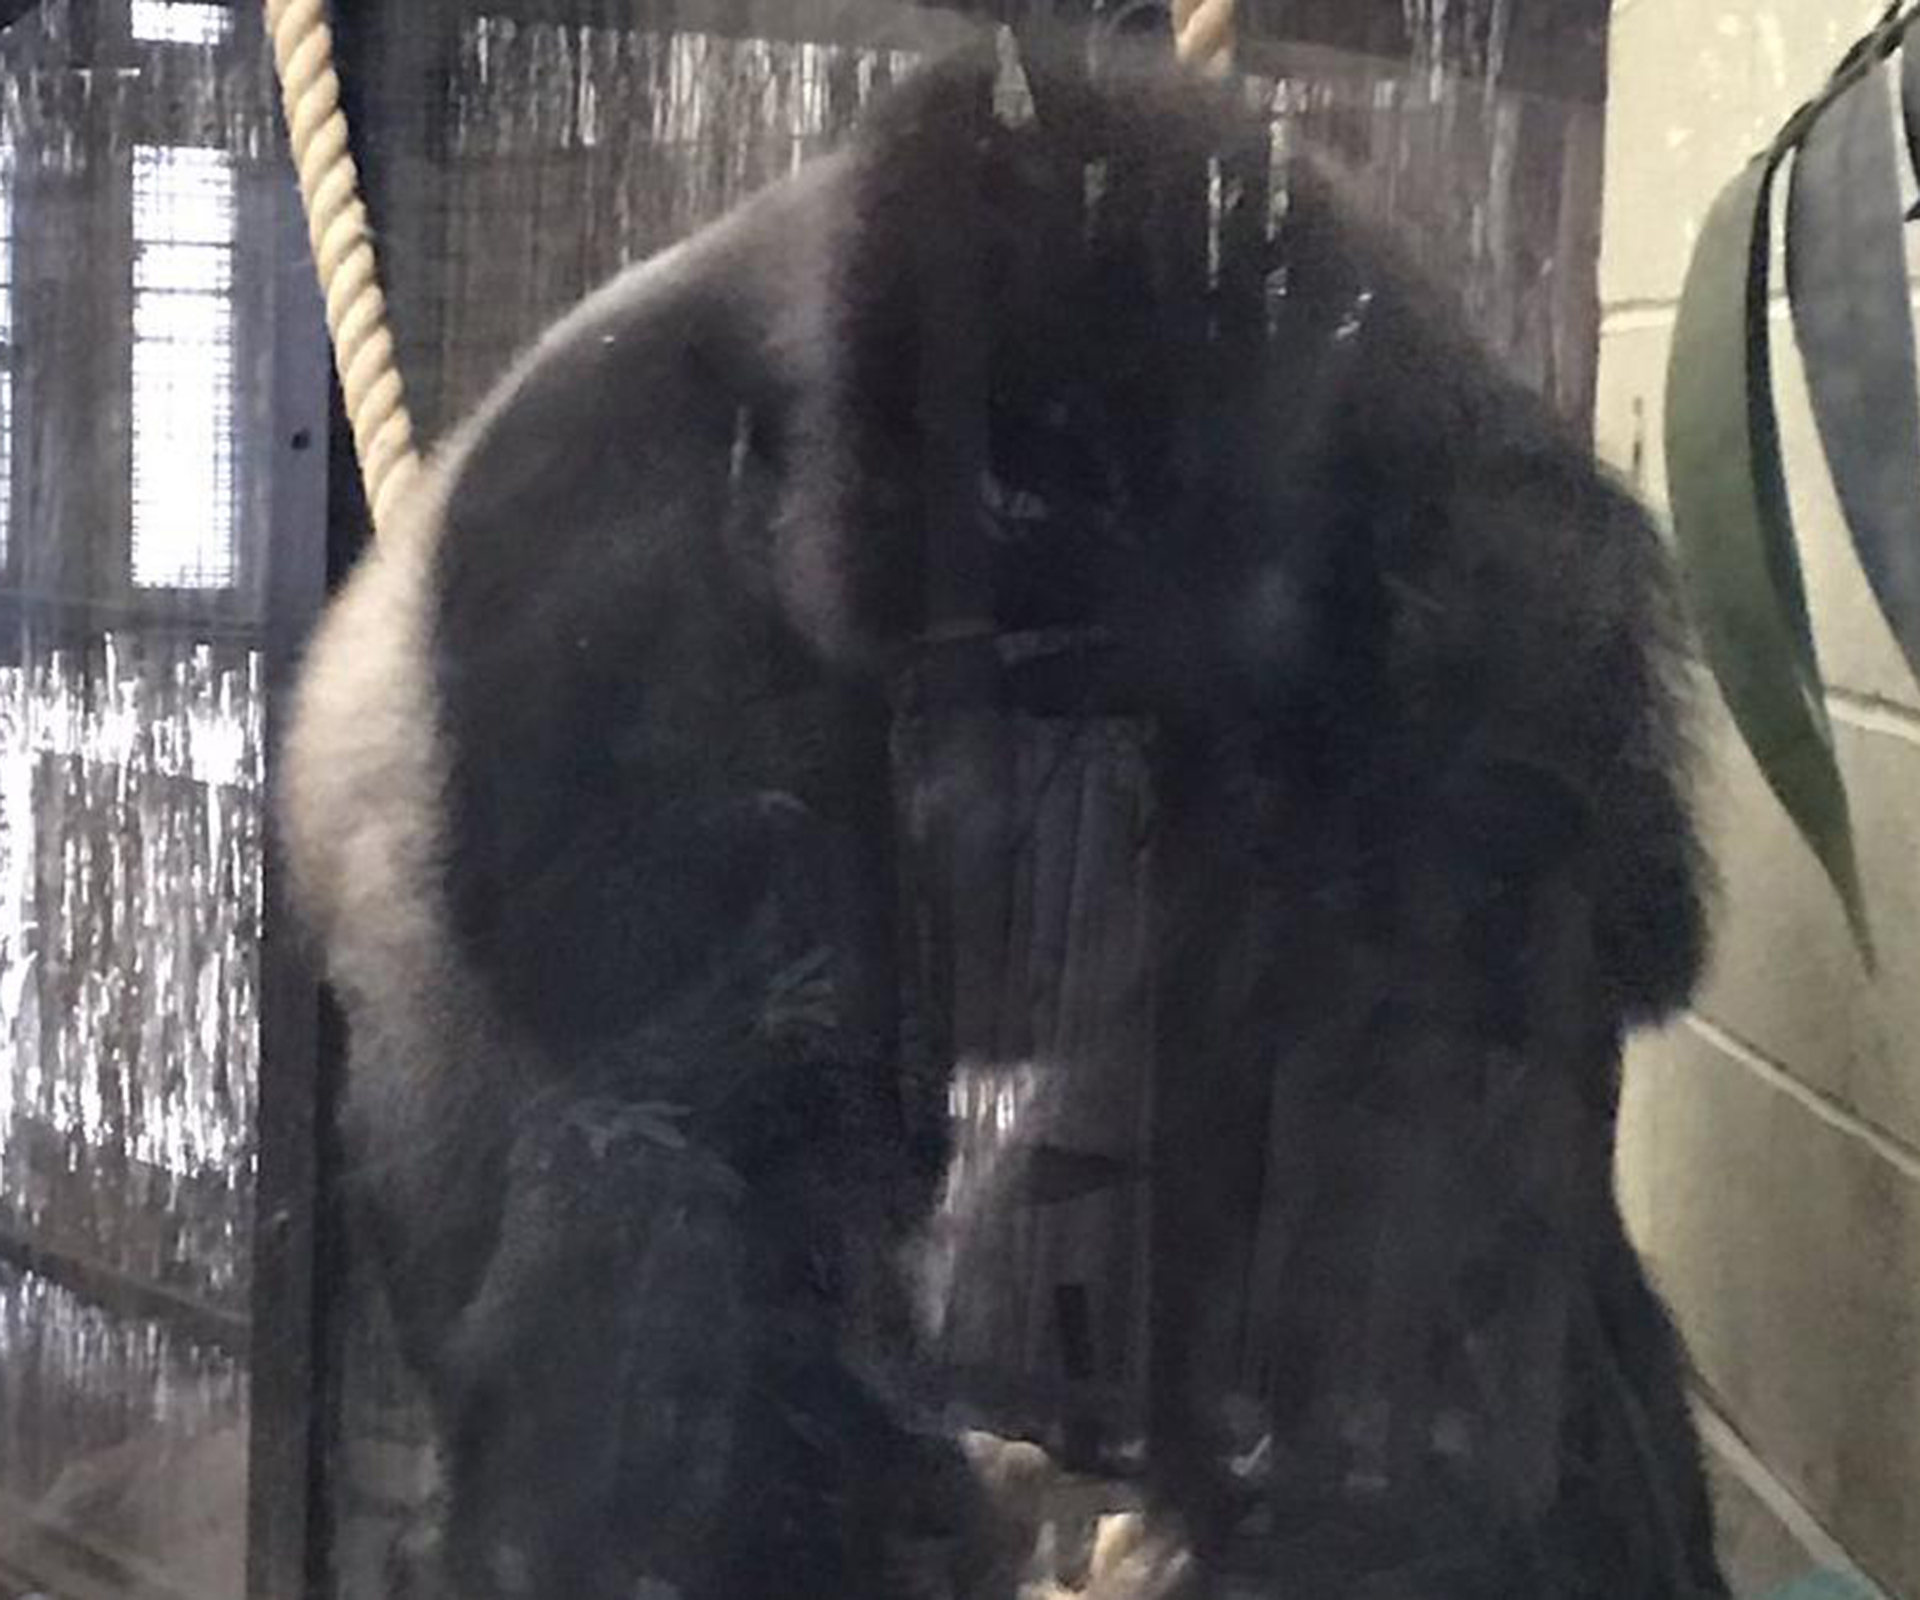 Gorilla escape sparks panic at city zoo